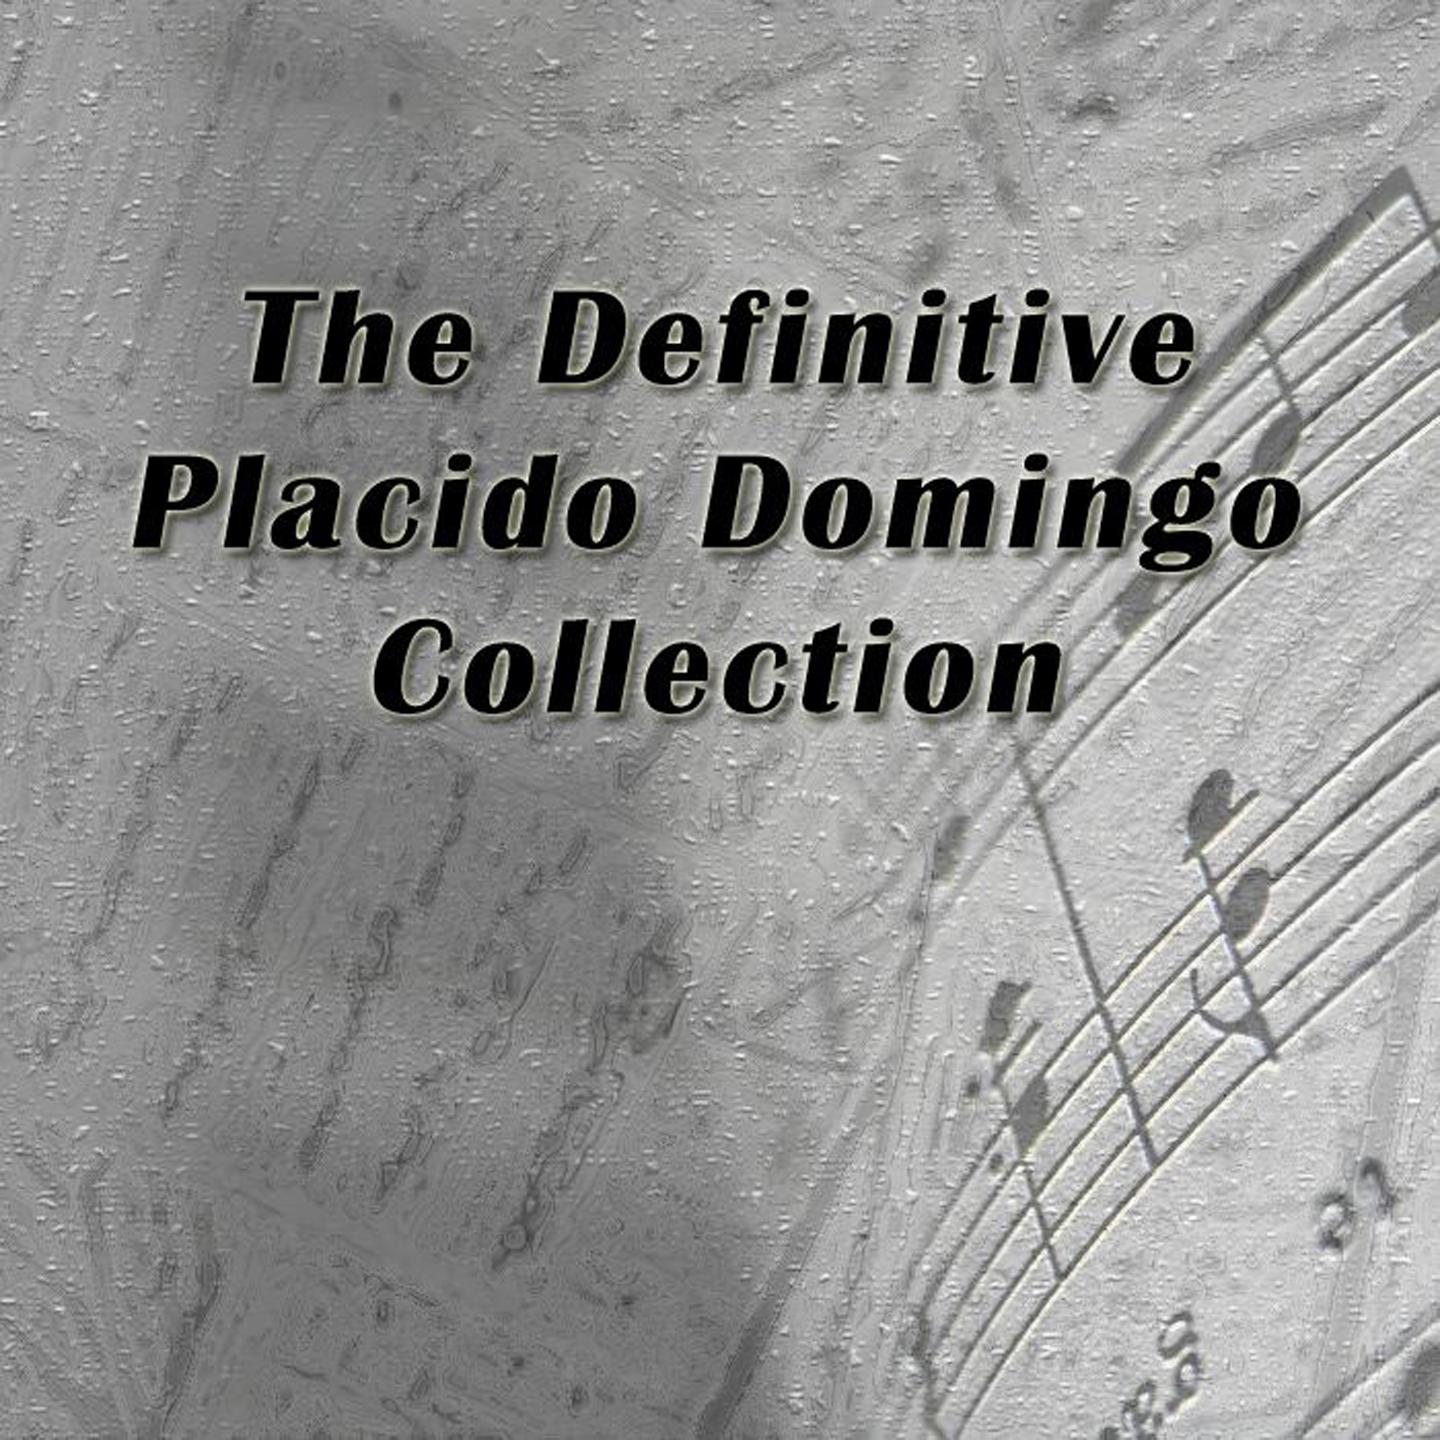 The Definitive Pla cido Domingo Collection